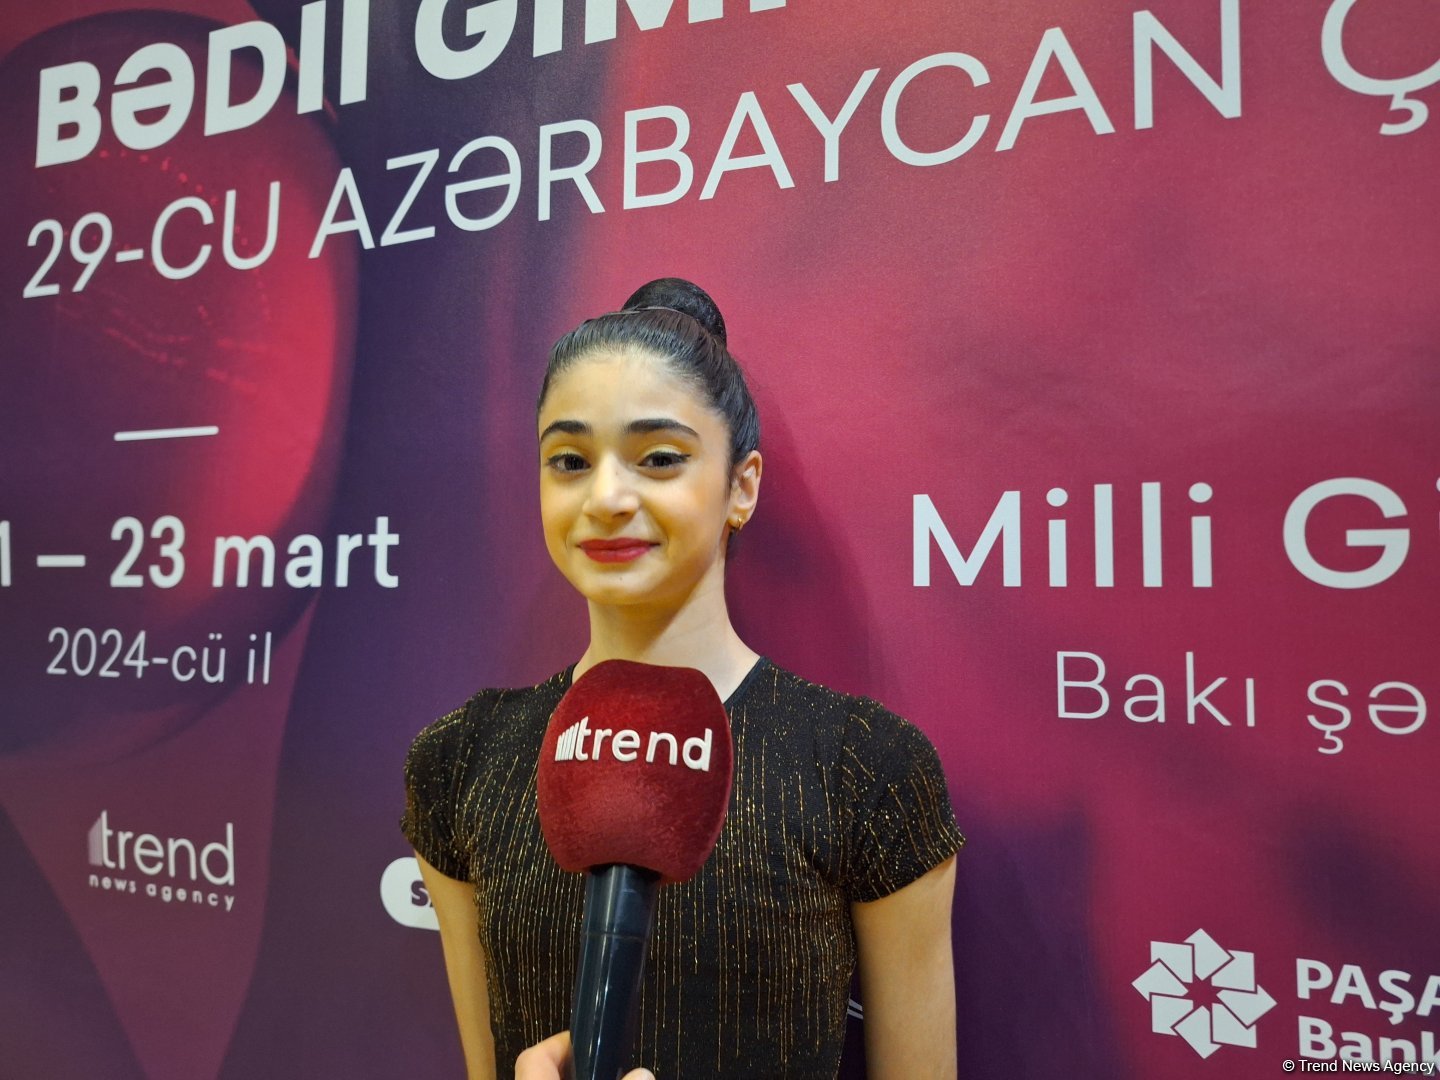 Great atmosphere prevails at Azerbaijan Rhythmic Gymnastics Championship - young athlete